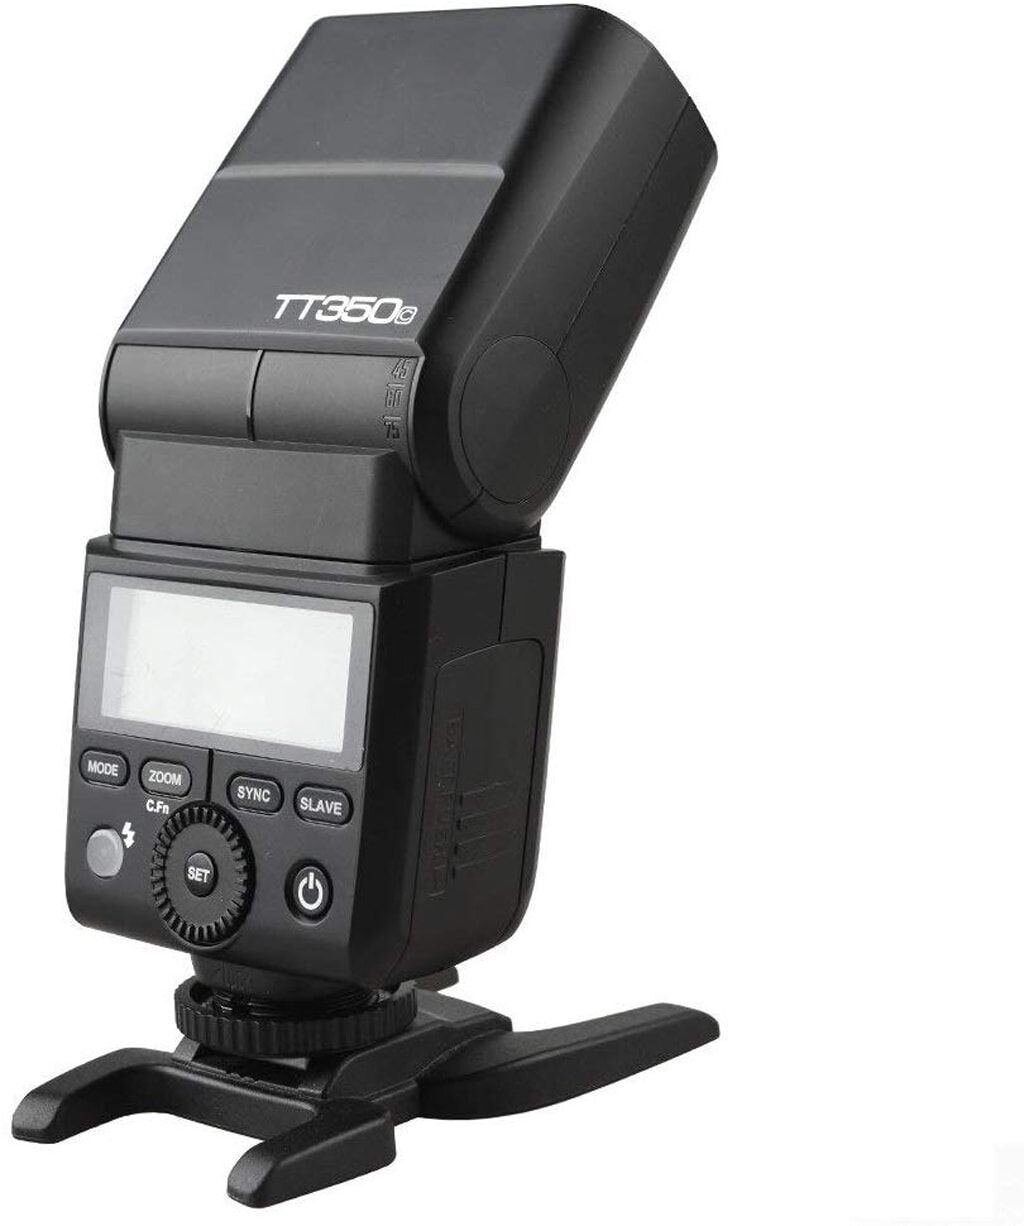 Godox TT350S Blitzgerät für Sony